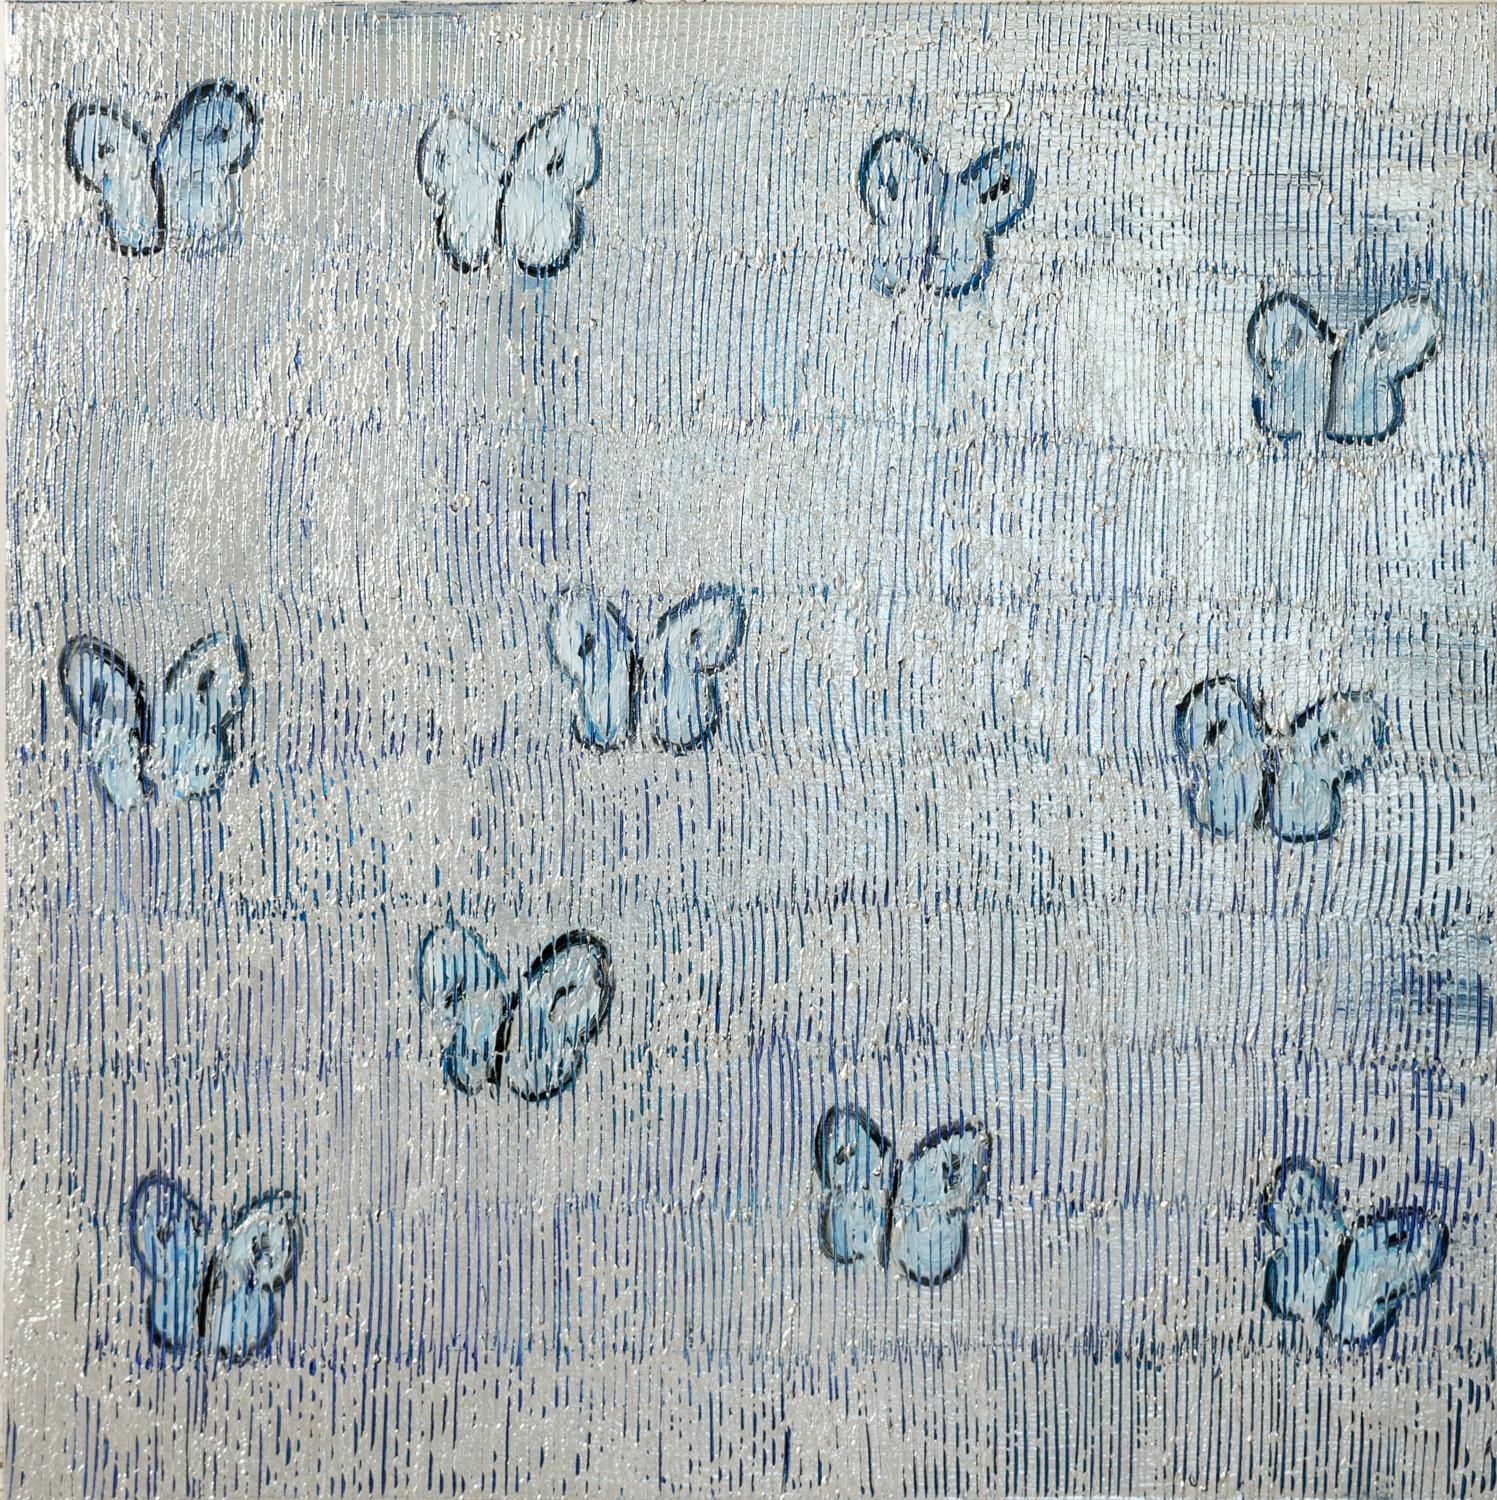 Hunt Slonem Figurative Painting – Silber Ascension Tues ""Schmetterlingsmalerei" Butterfly Painting" Butterfliesen Blau und Silber